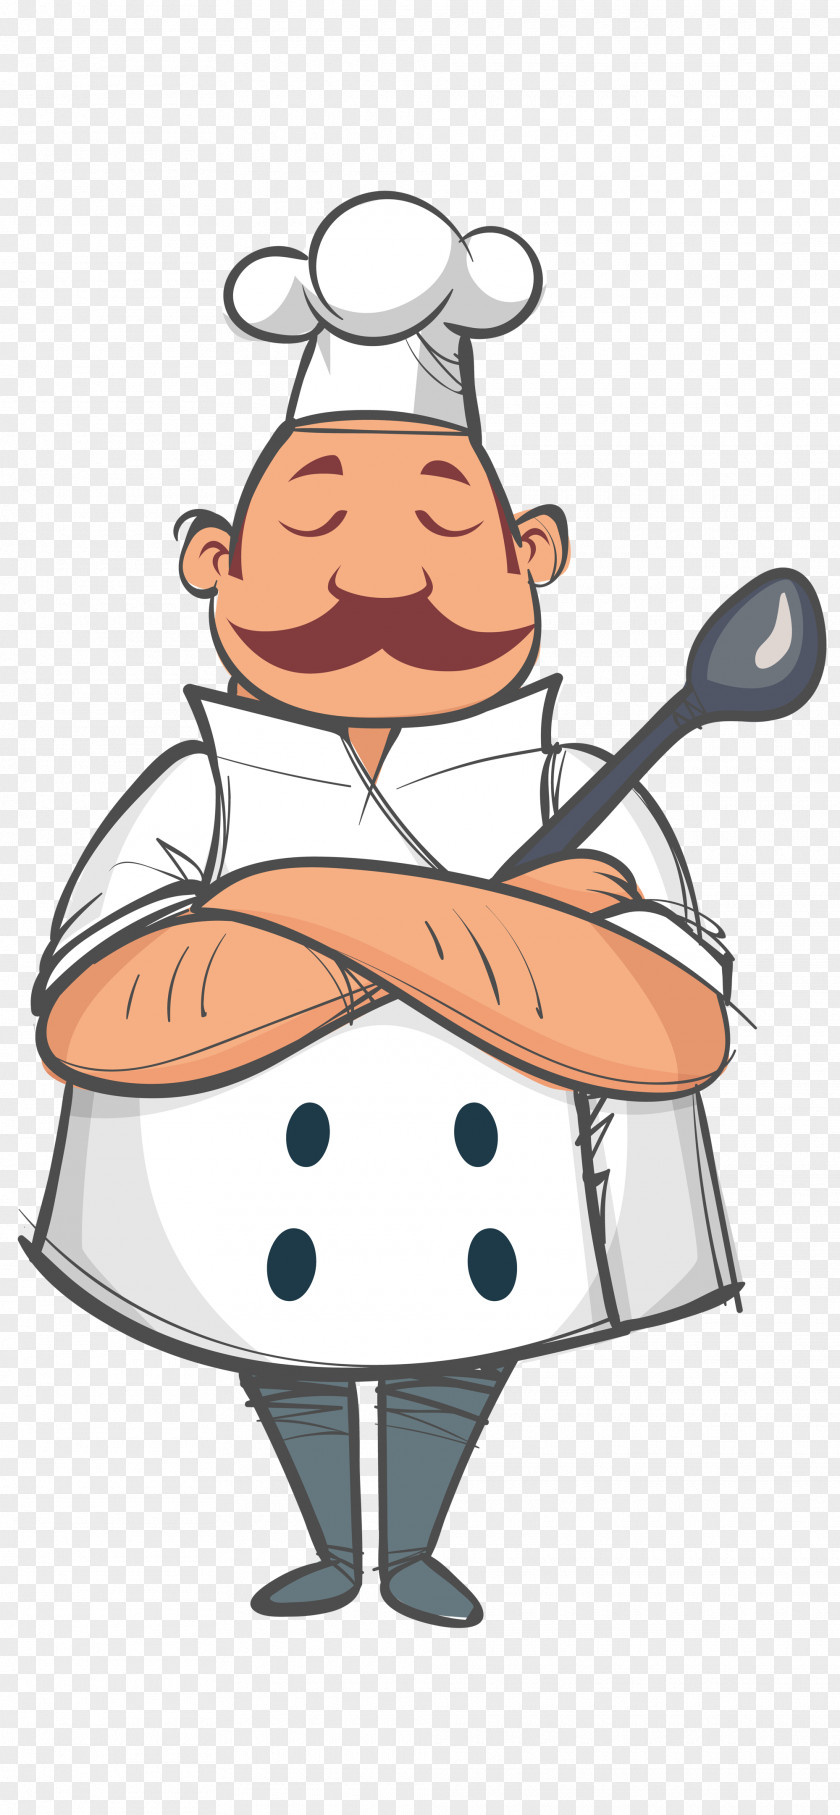 Chef Illustration Image Cartoon Vector Graphics PNG